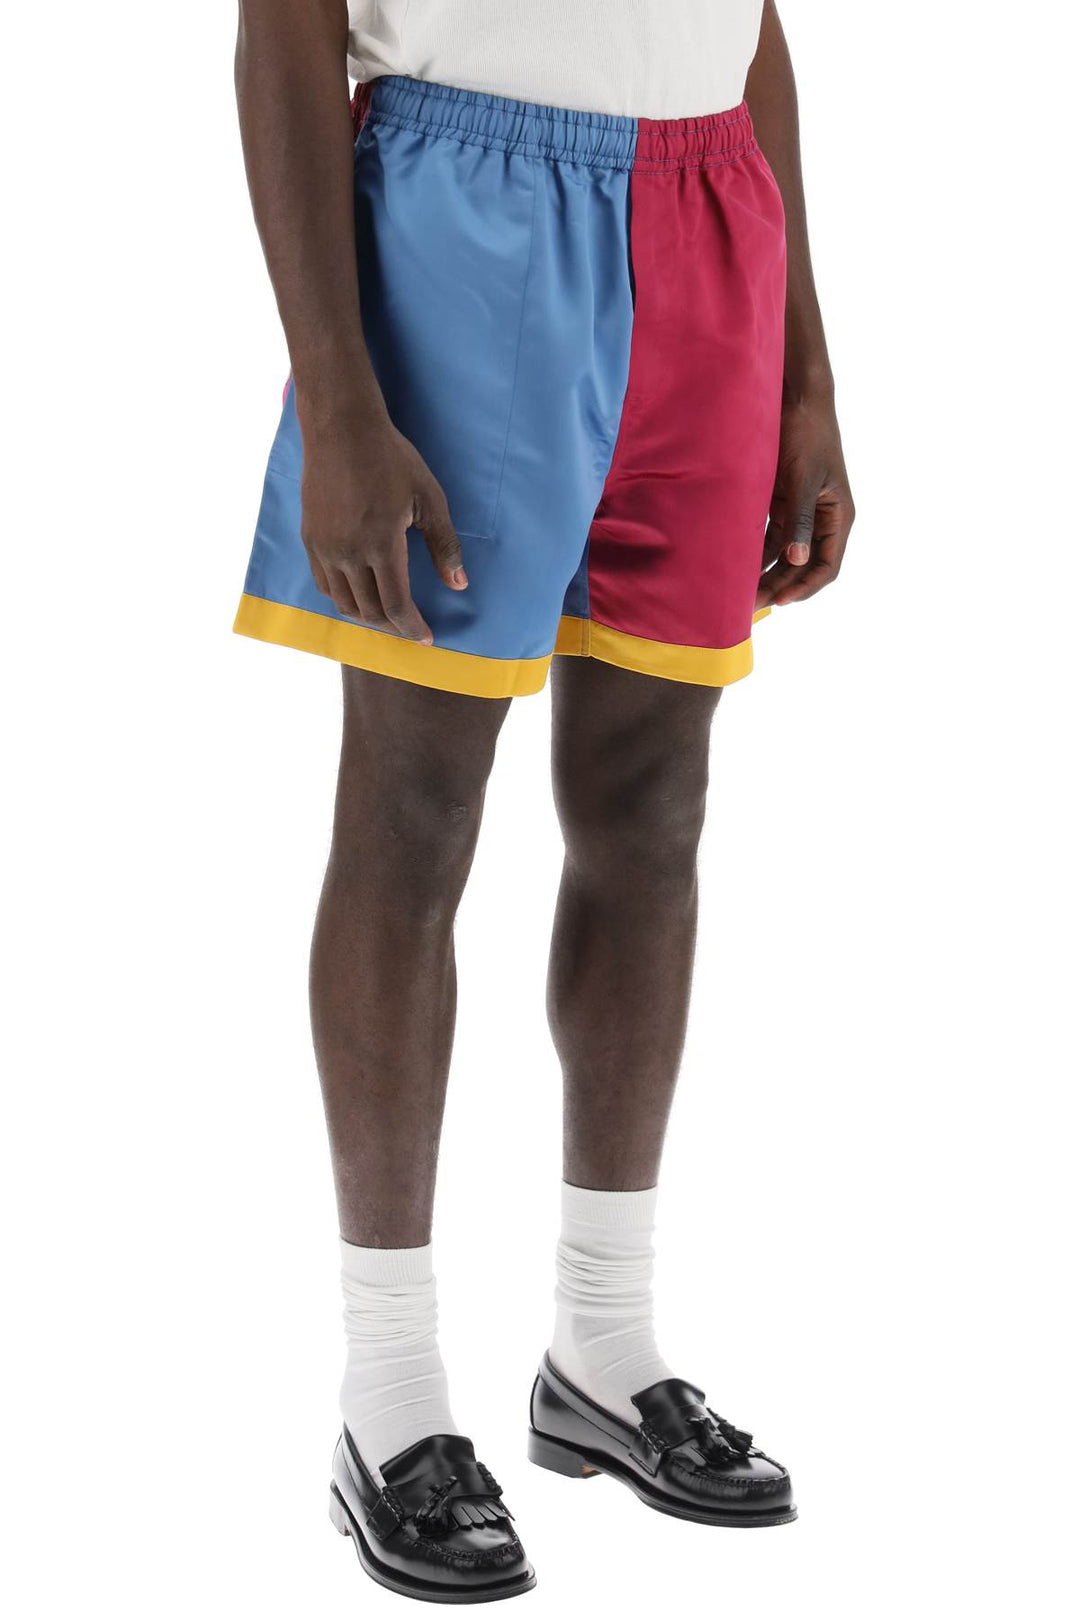 Bode champ color-block shorts-1